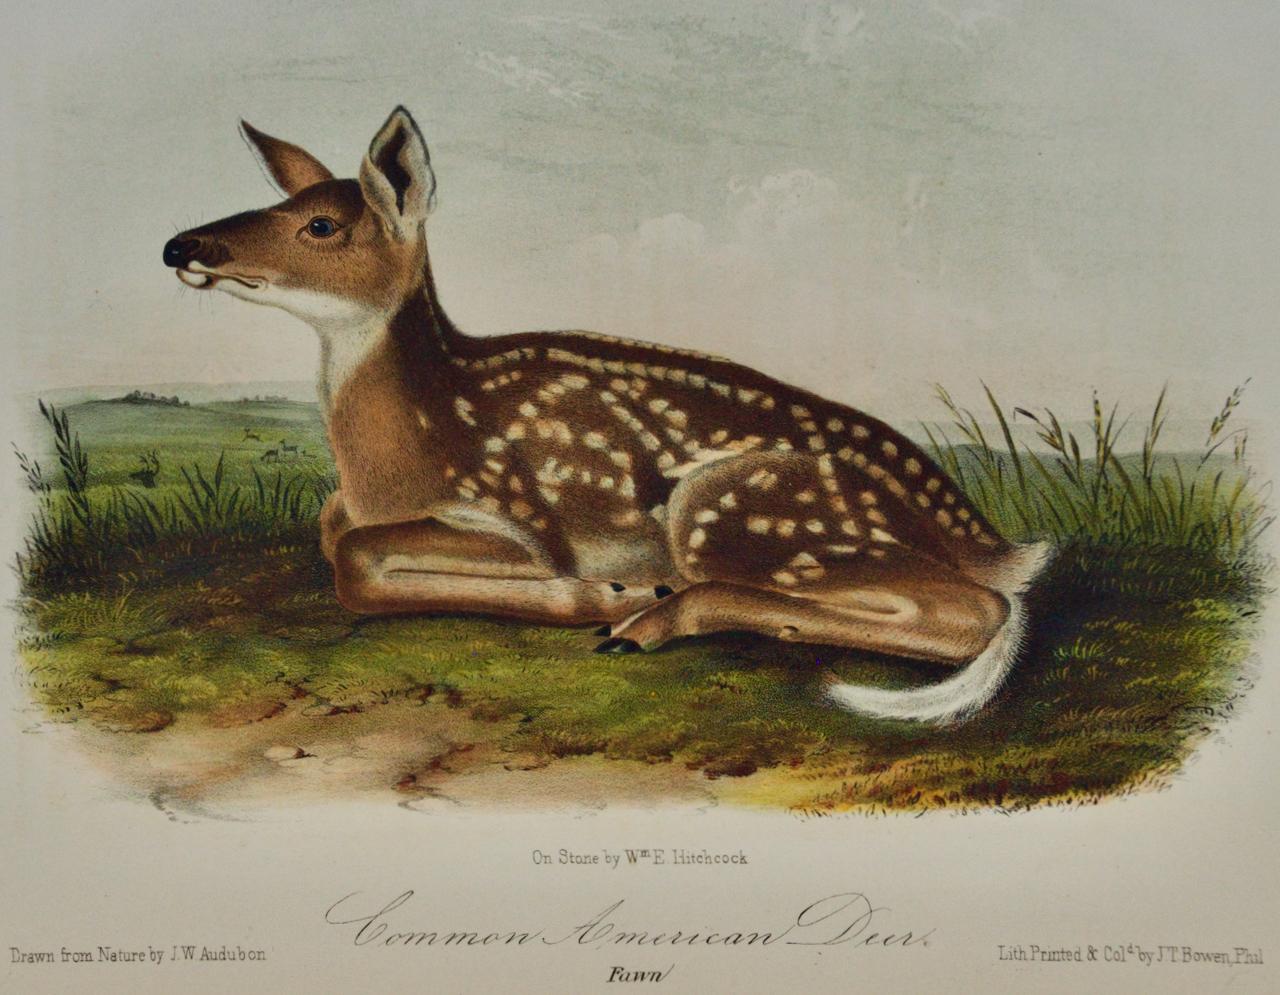 Common American Deer: An Original Audubon 19th Century Hand-colored Lithograph - Print by John James Audubon